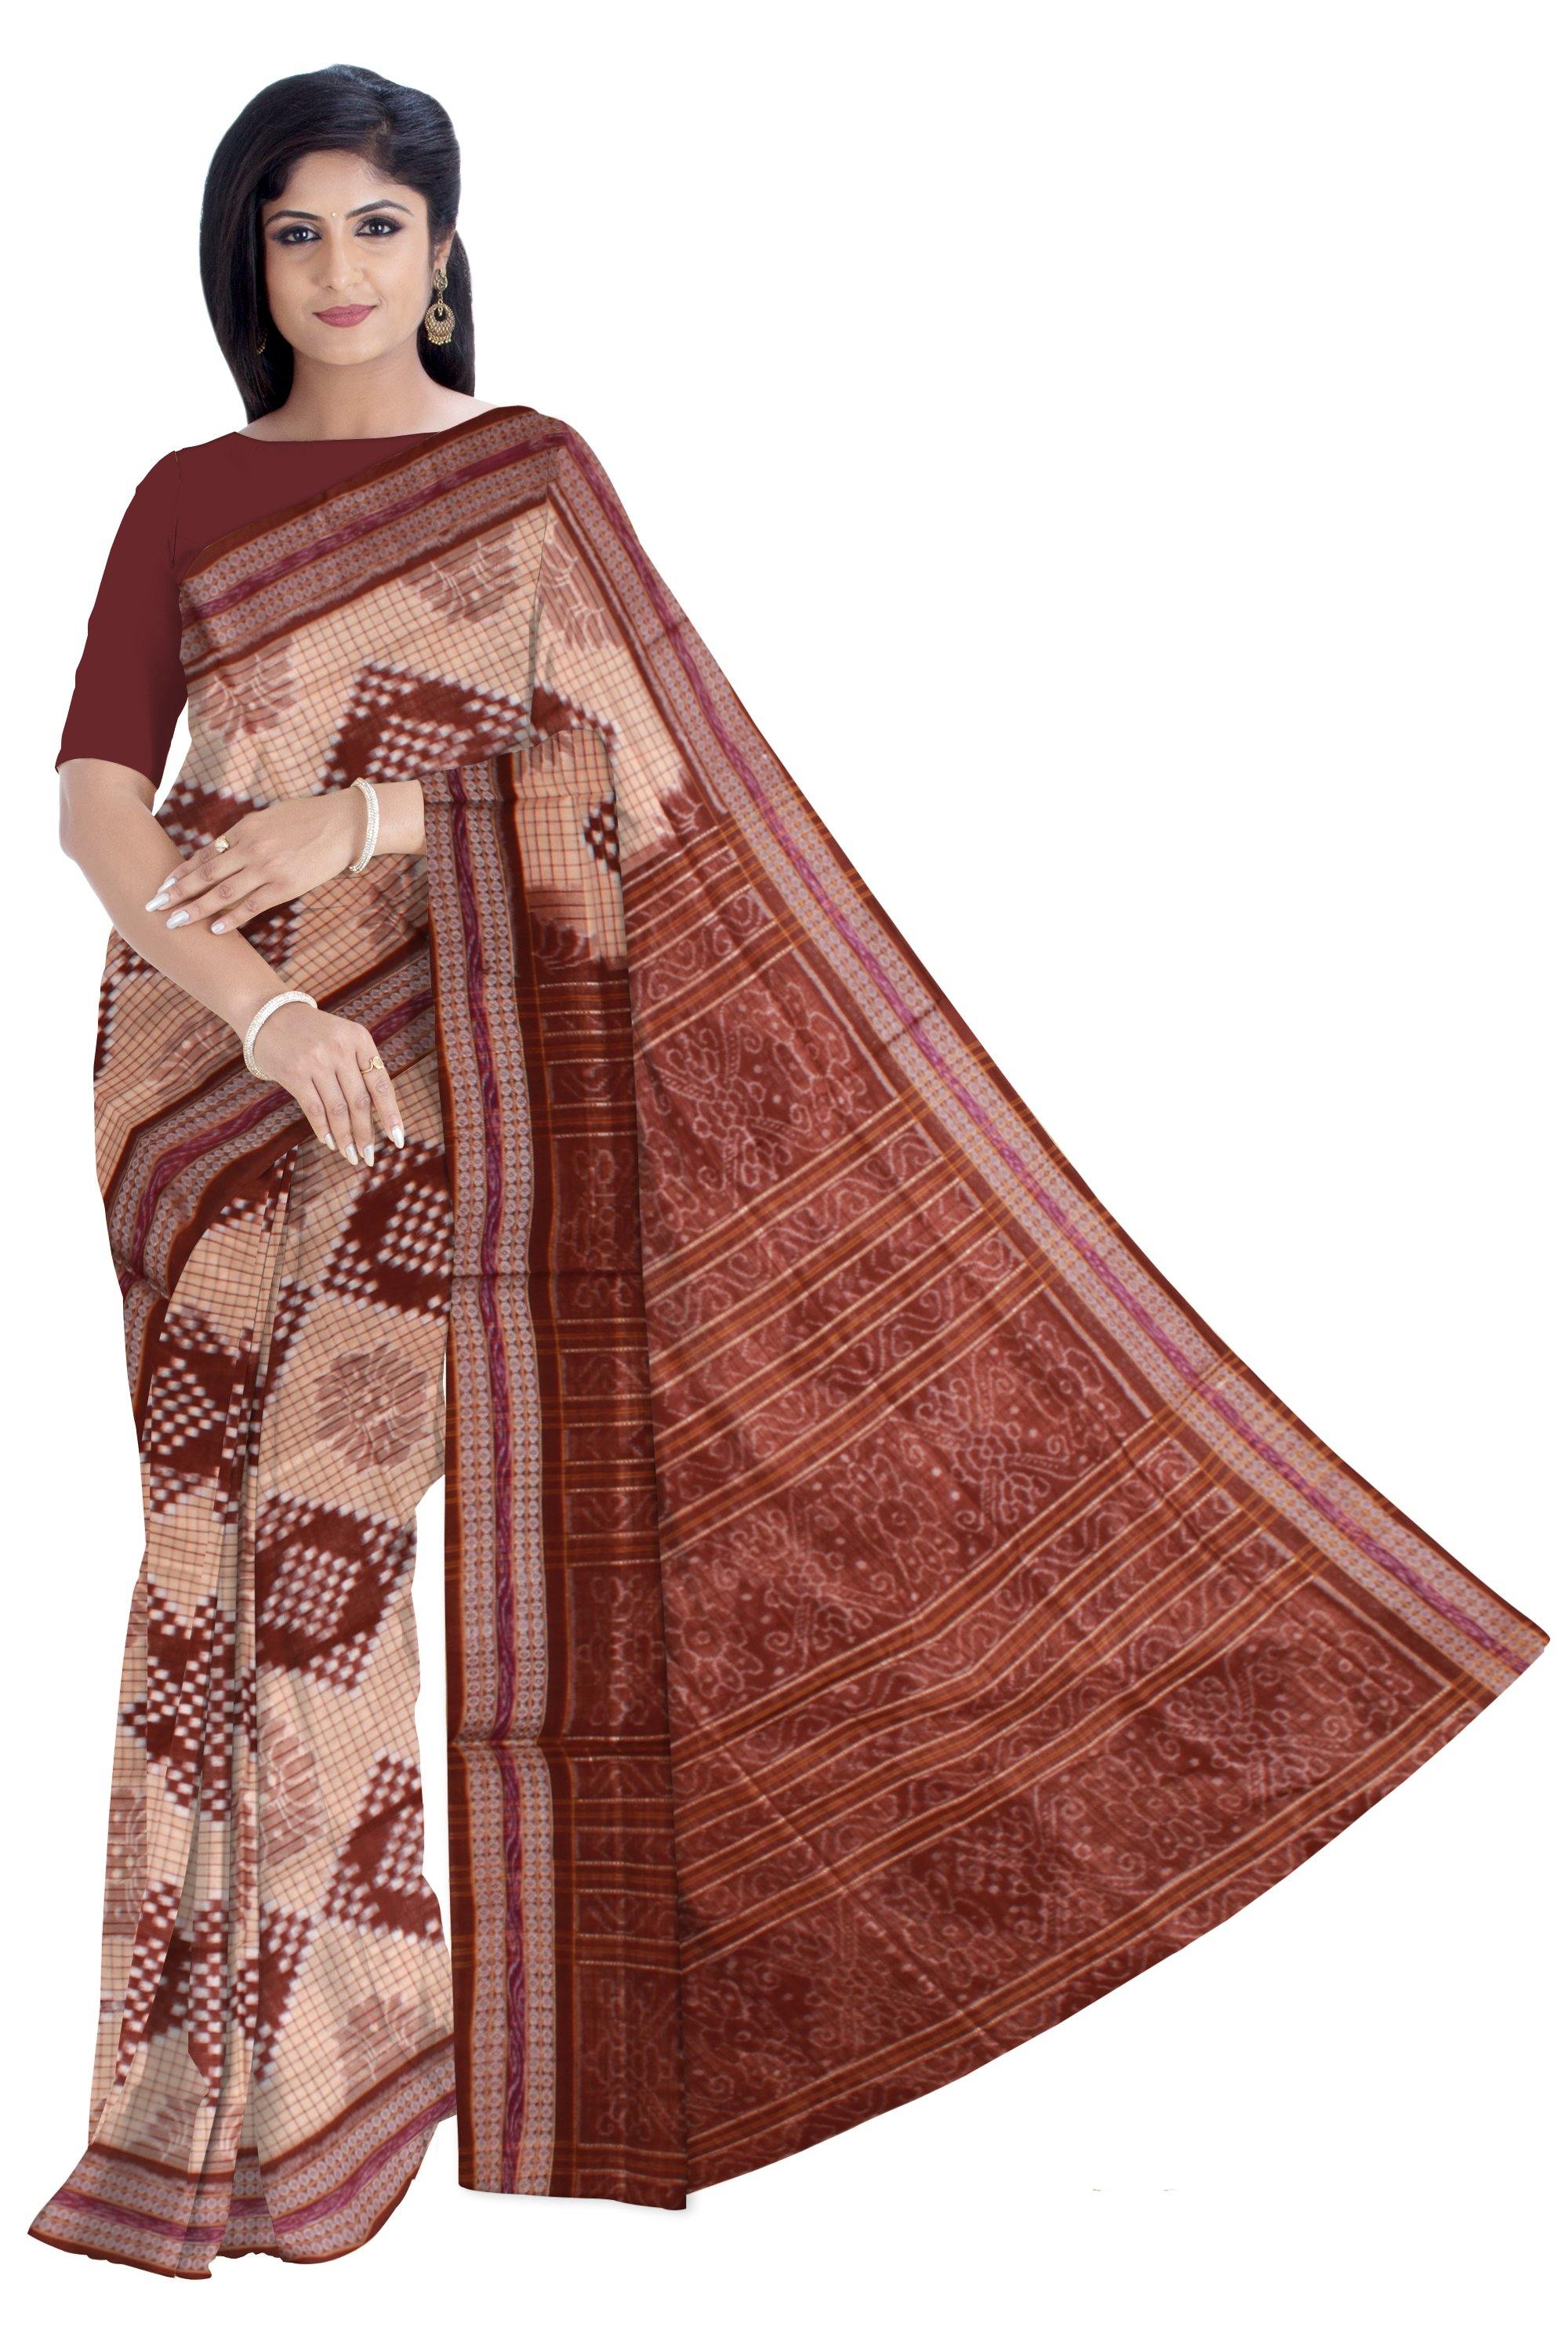 Box pattern Sambalpuri Sapta saree in Grey color without blouse piece - Koshali Arts & Crafts Enterprise